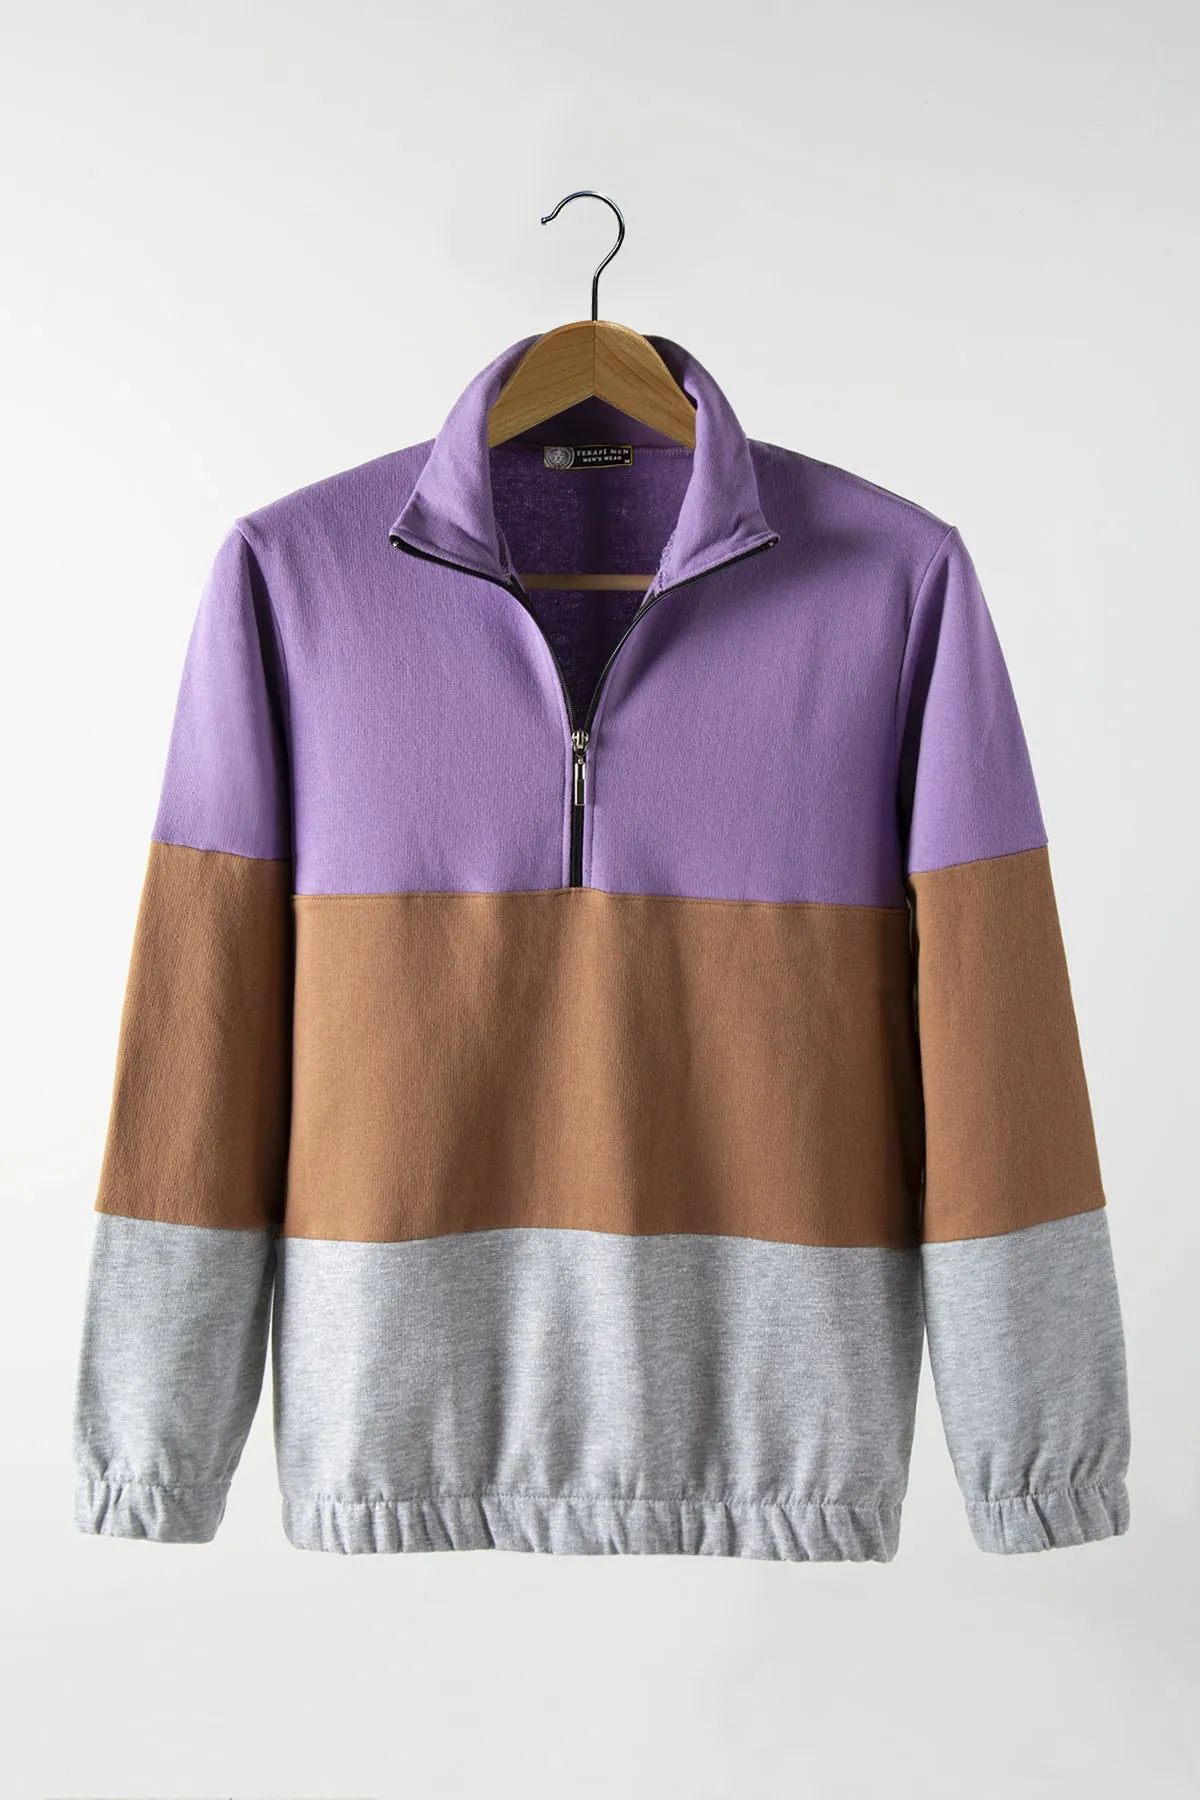 Therapy Men Unisex Three Blocky Half Zipper Casual Mould Sweatshirt 21K-5200456 Purple